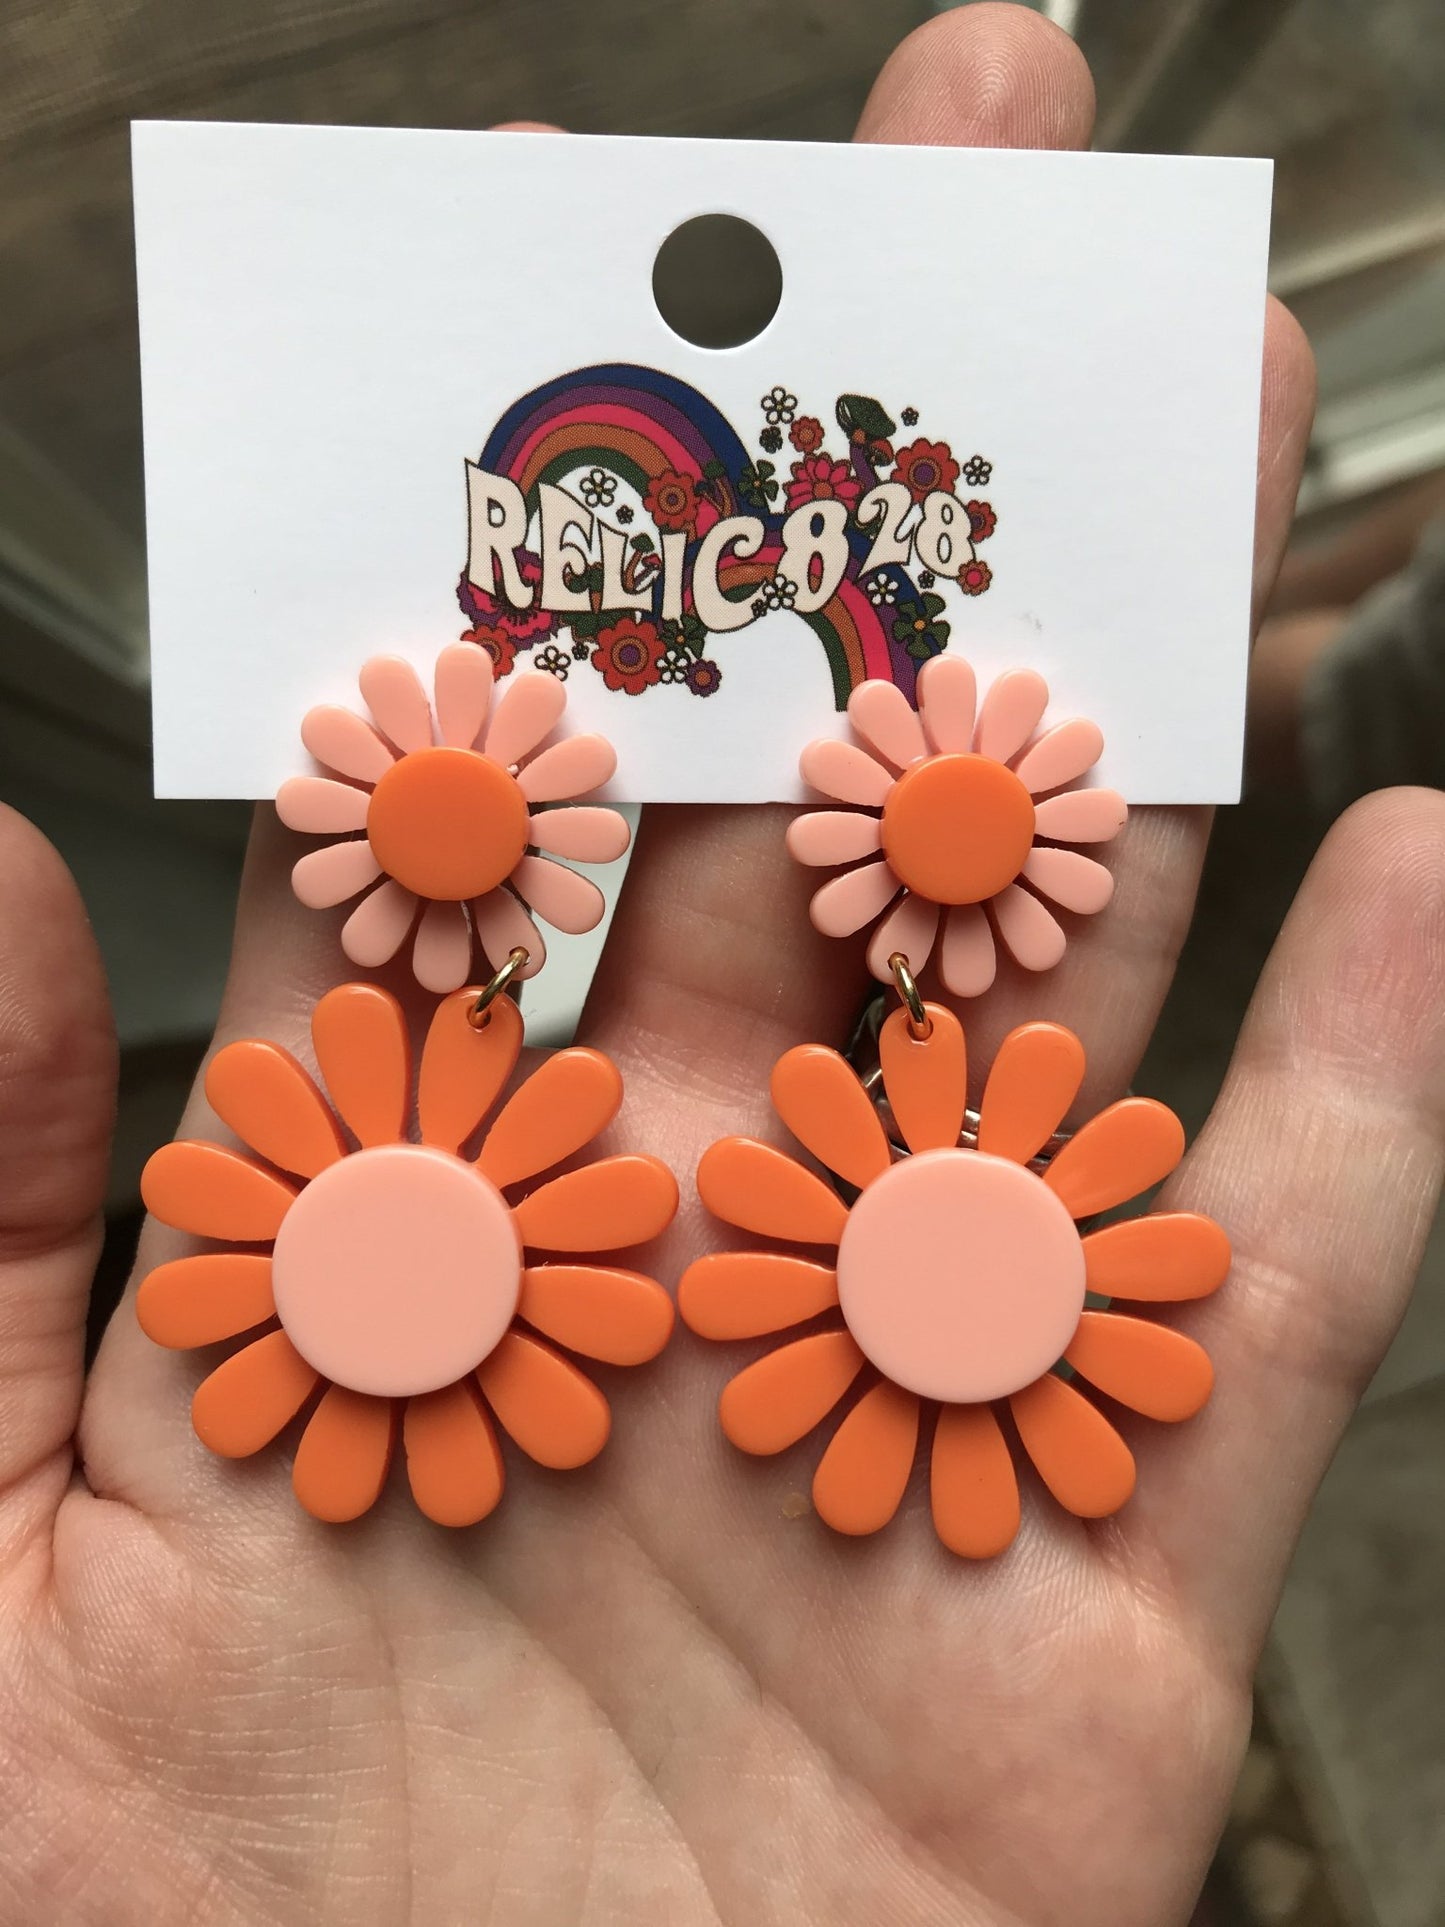 60s Blush Pink and Orange Flower Power Mod Earrings Groovy Girl - Relic828